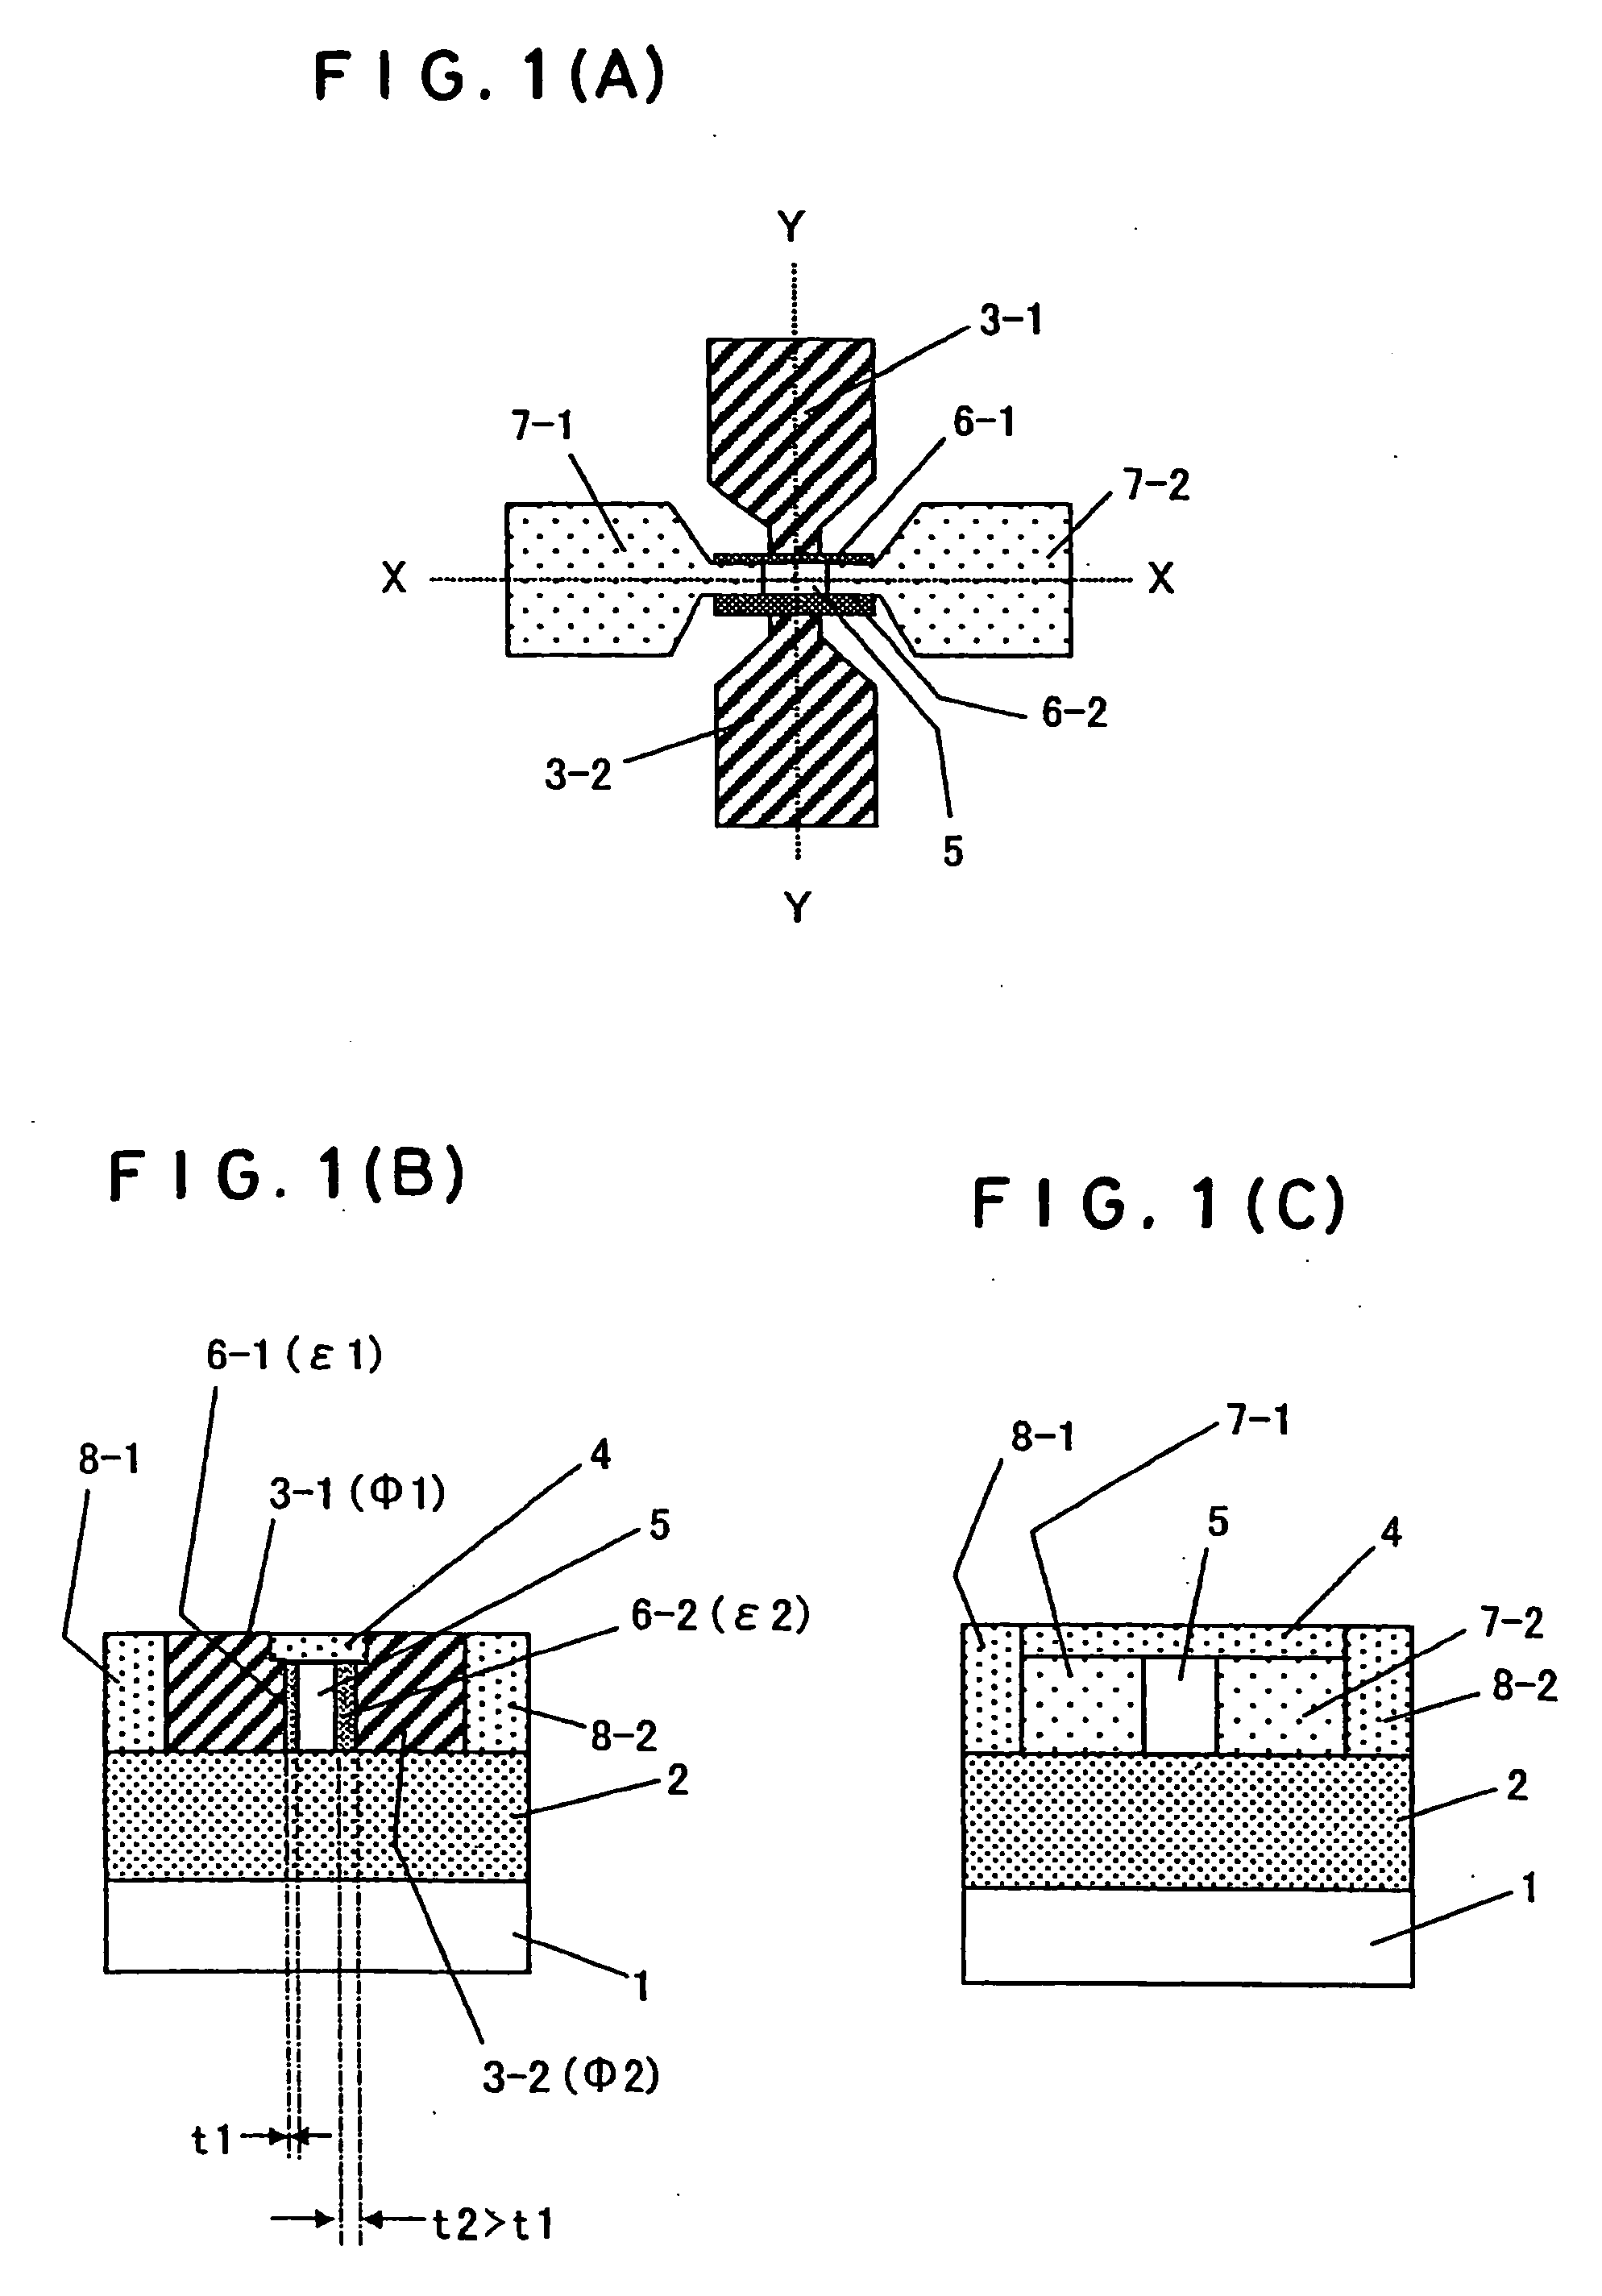 Dual-gate field effect transistor